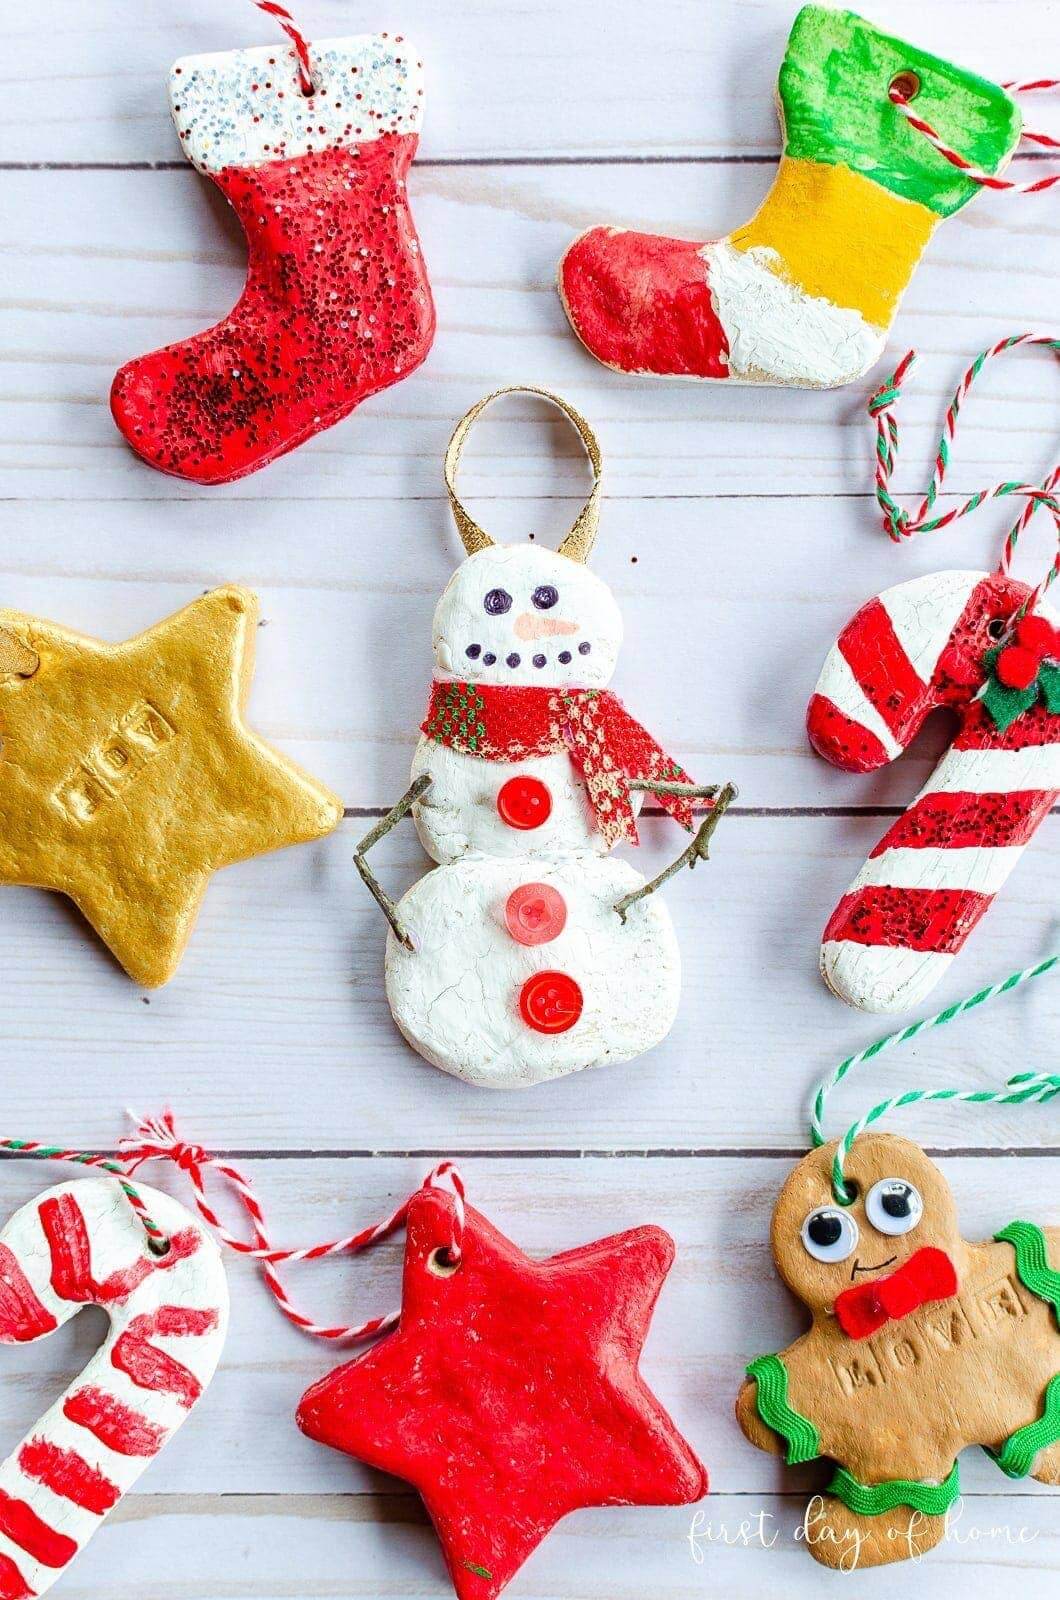 Adorable Christmas Ornament Craft Activities With Salt Dough Using String & Acrylic Paint - DIY Salt Dough Christmas Ornaments